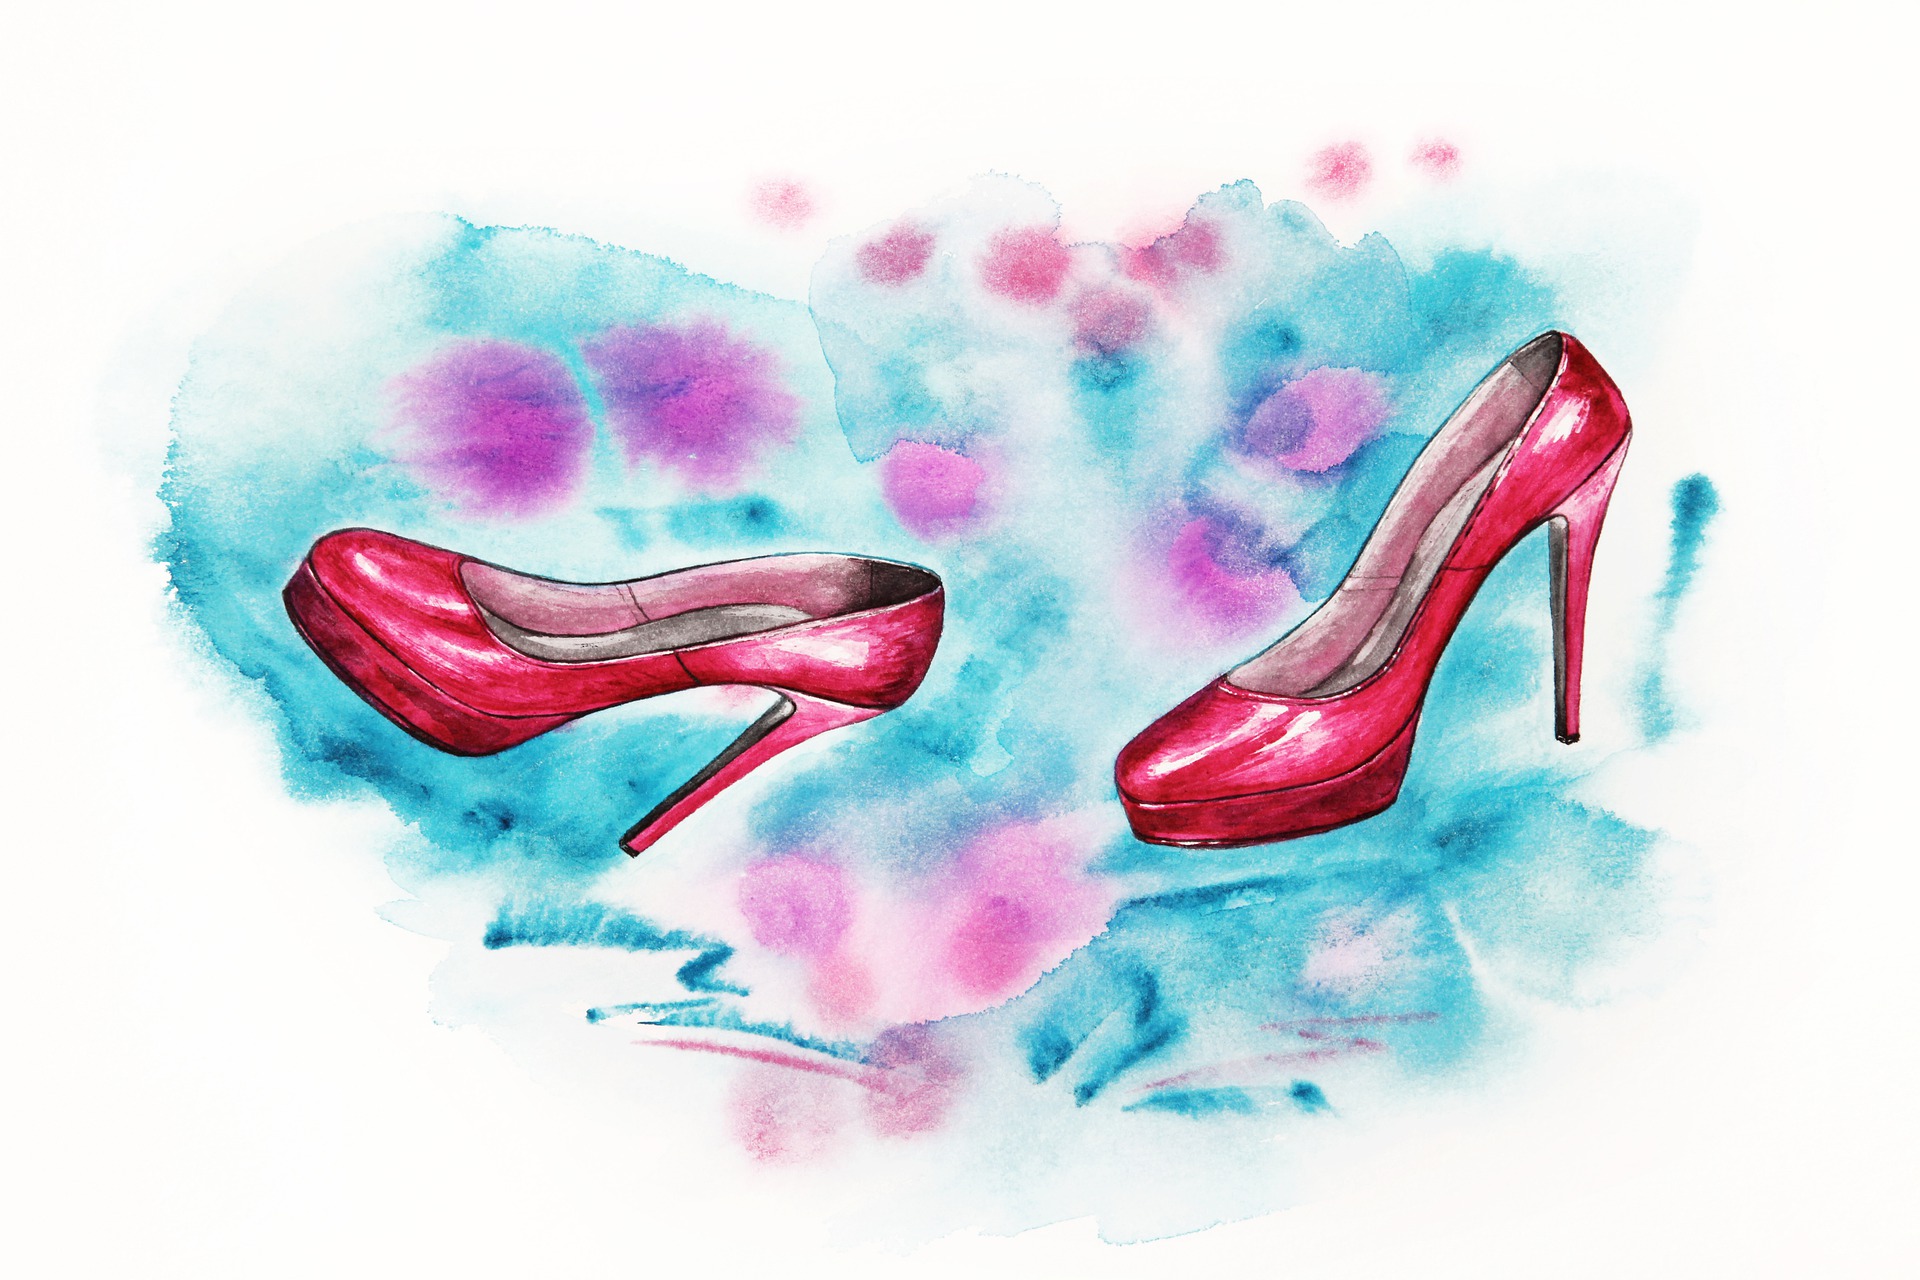 six inch heels: Image by Nika Akin from Pixabay